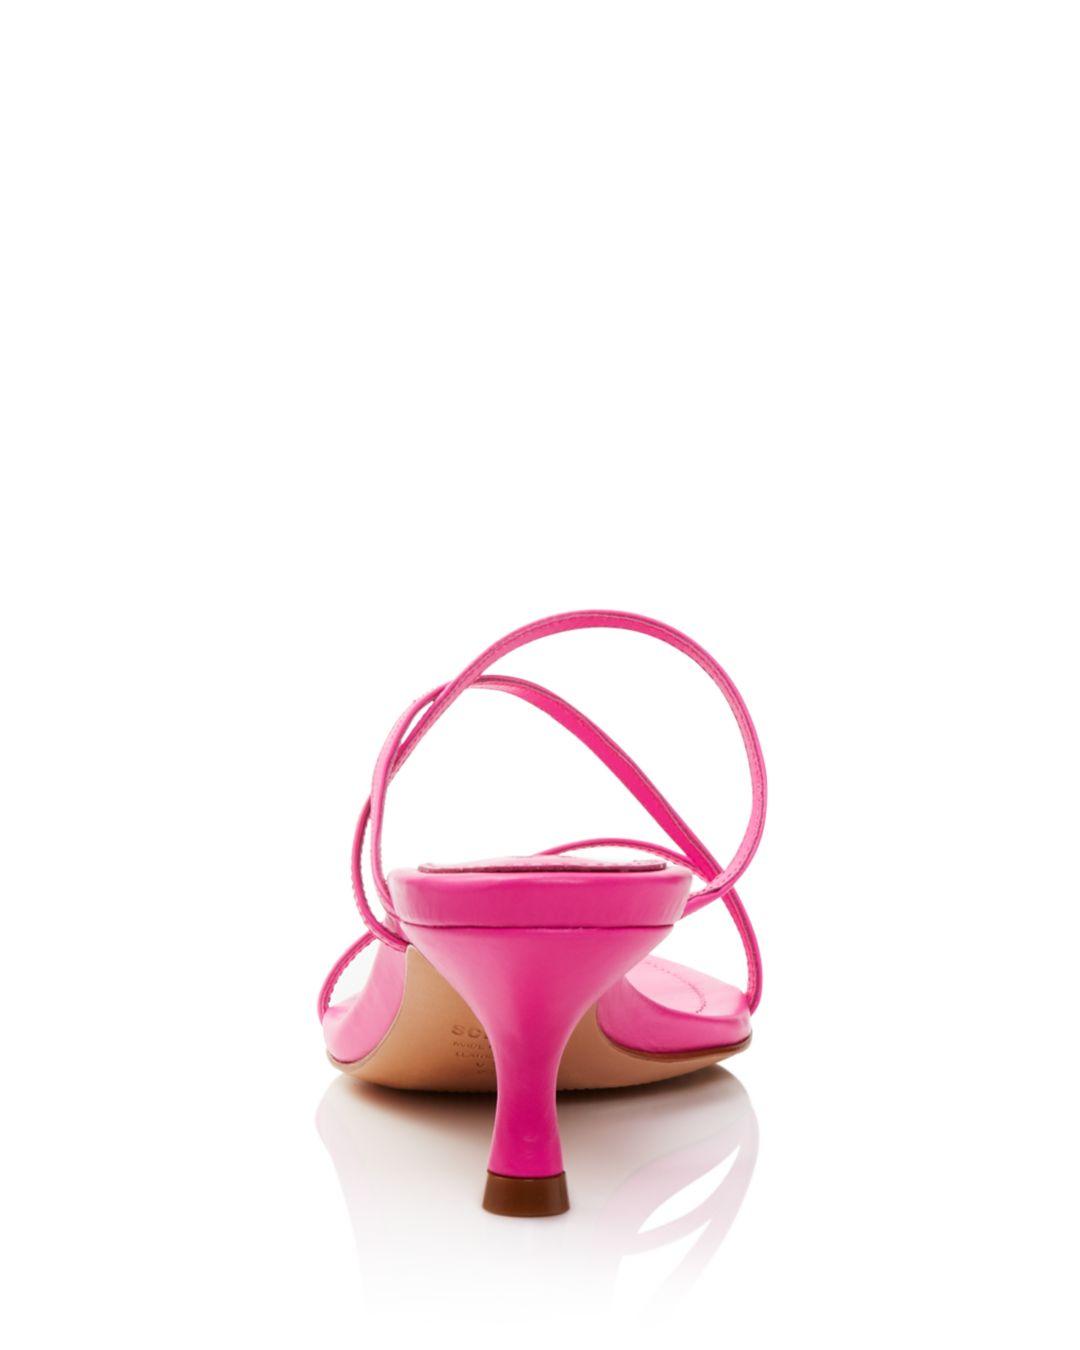 Schutz Women's Evenise Kitten Heel Sandals in Pink | Lyst